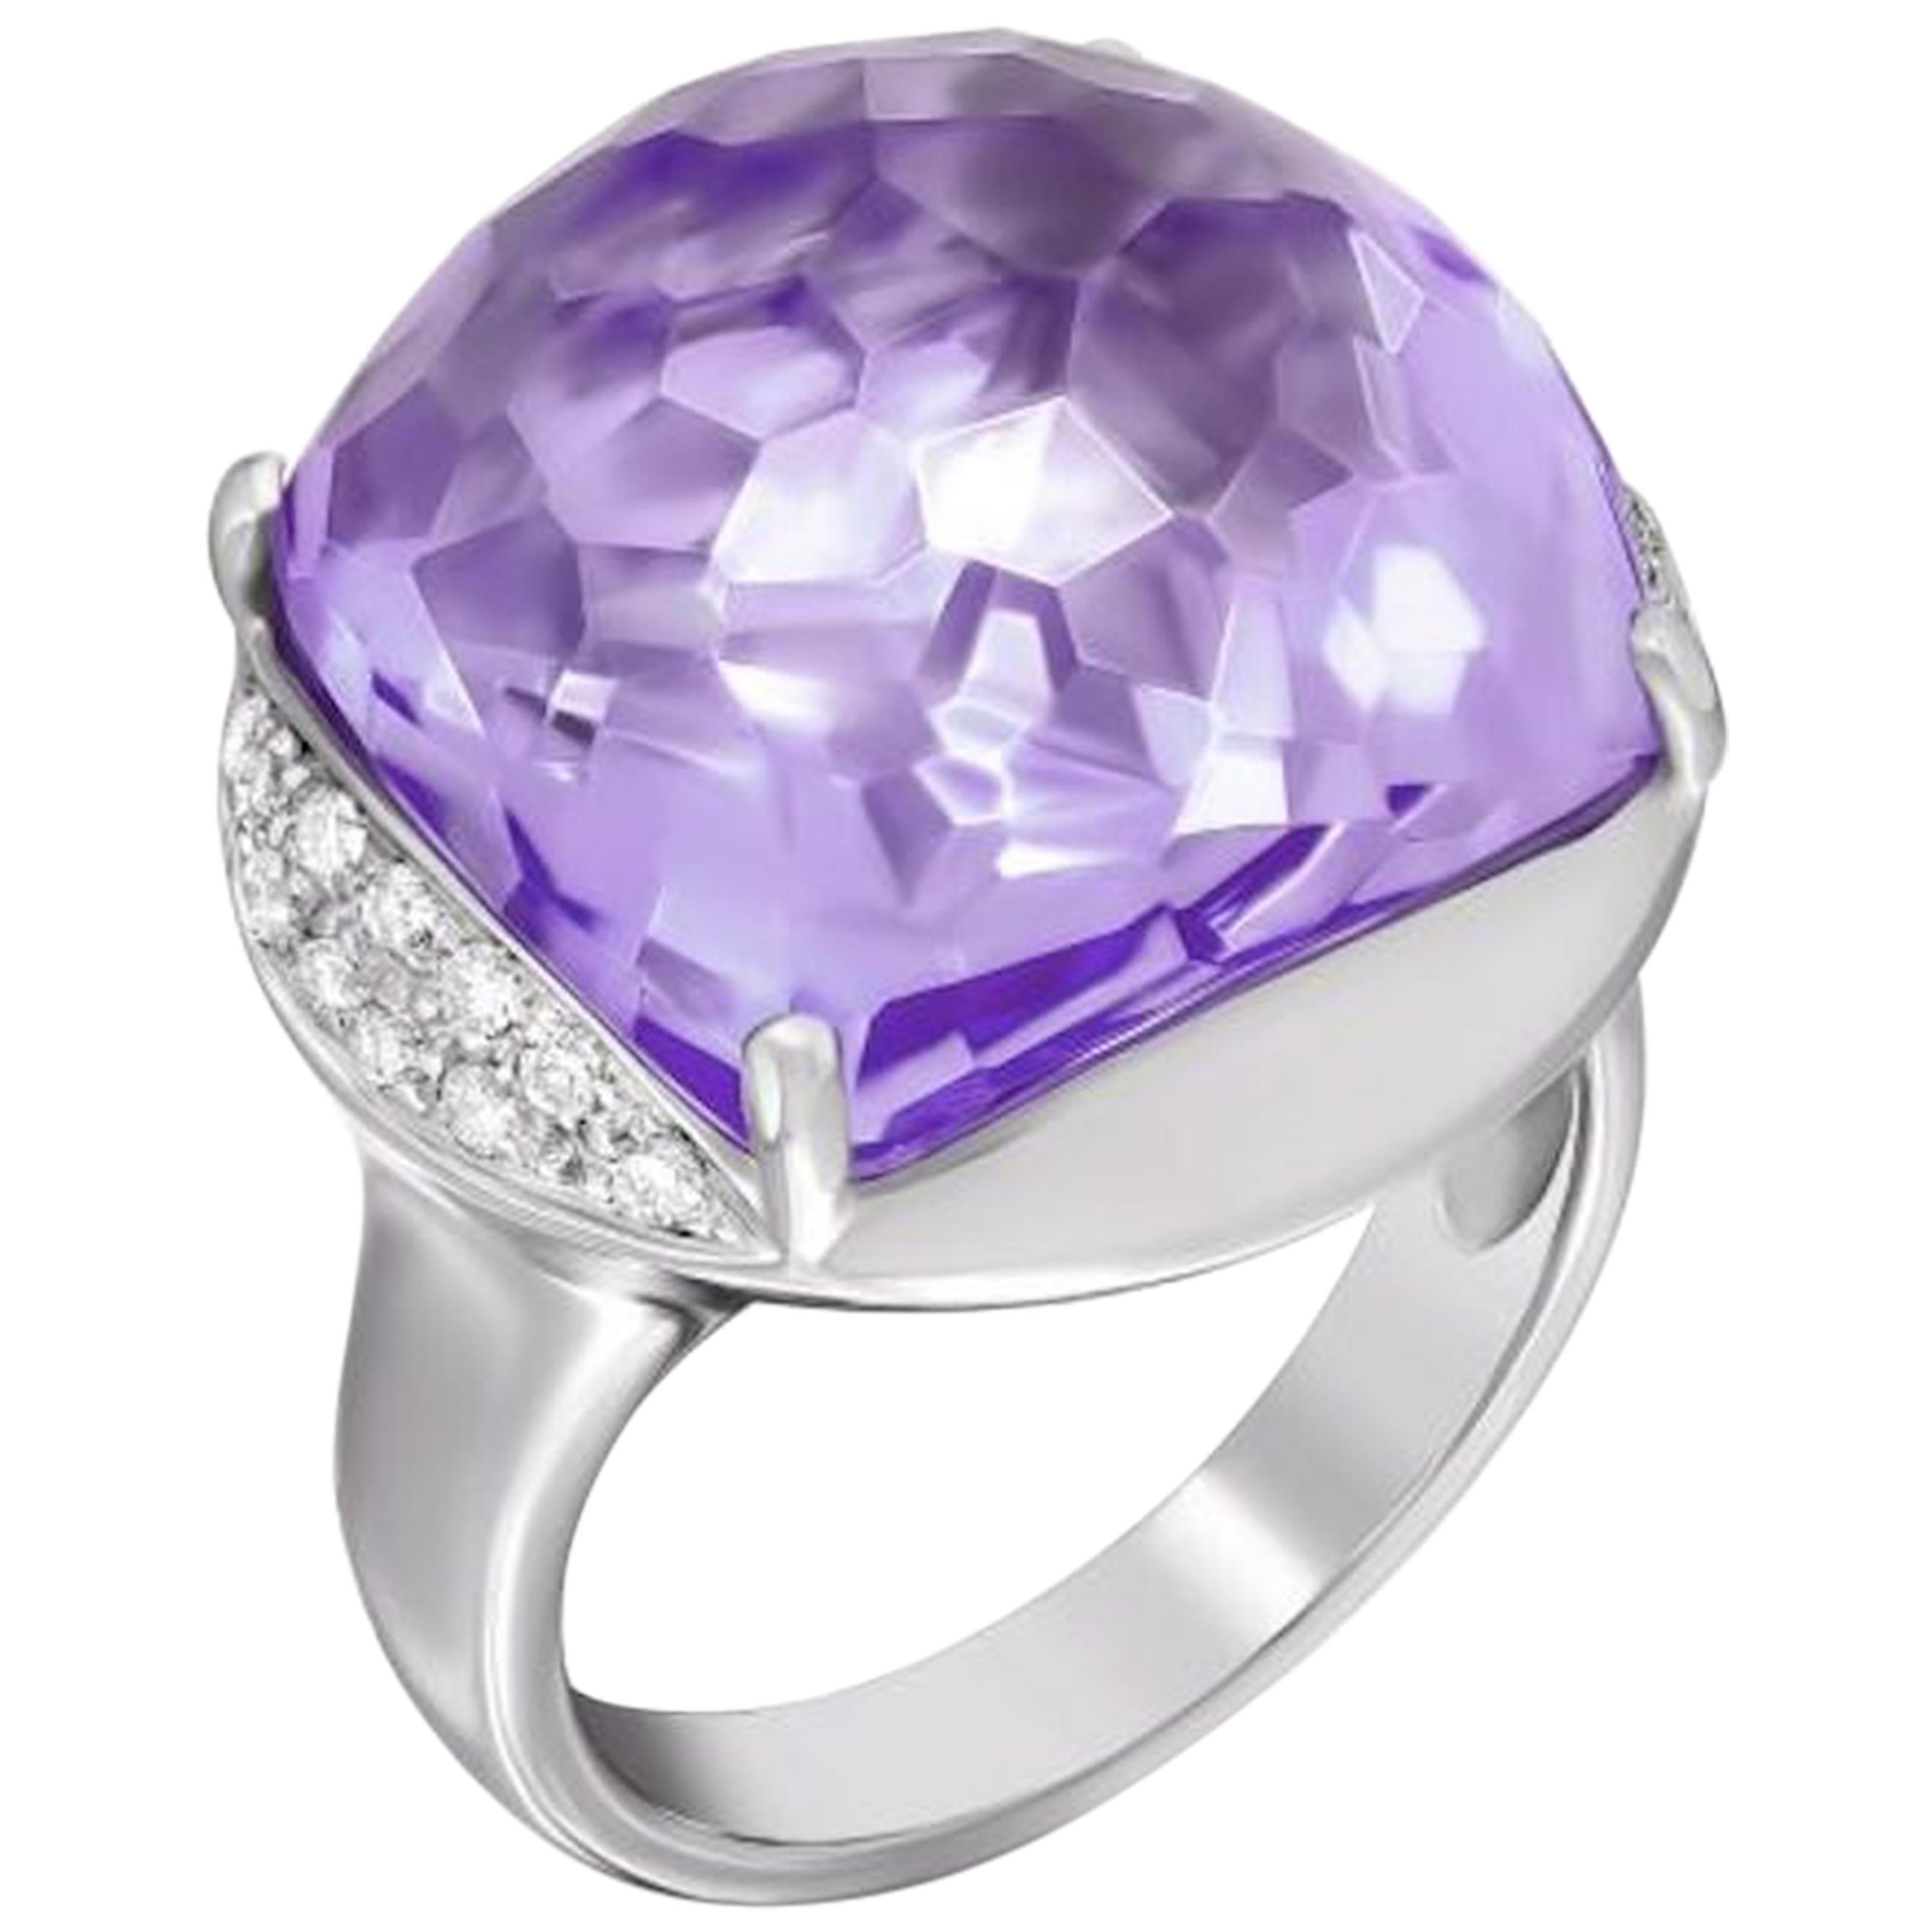 Fancy Impressive Natural Amethyst Diamond White Gold Diamond Ring for Her For Sale